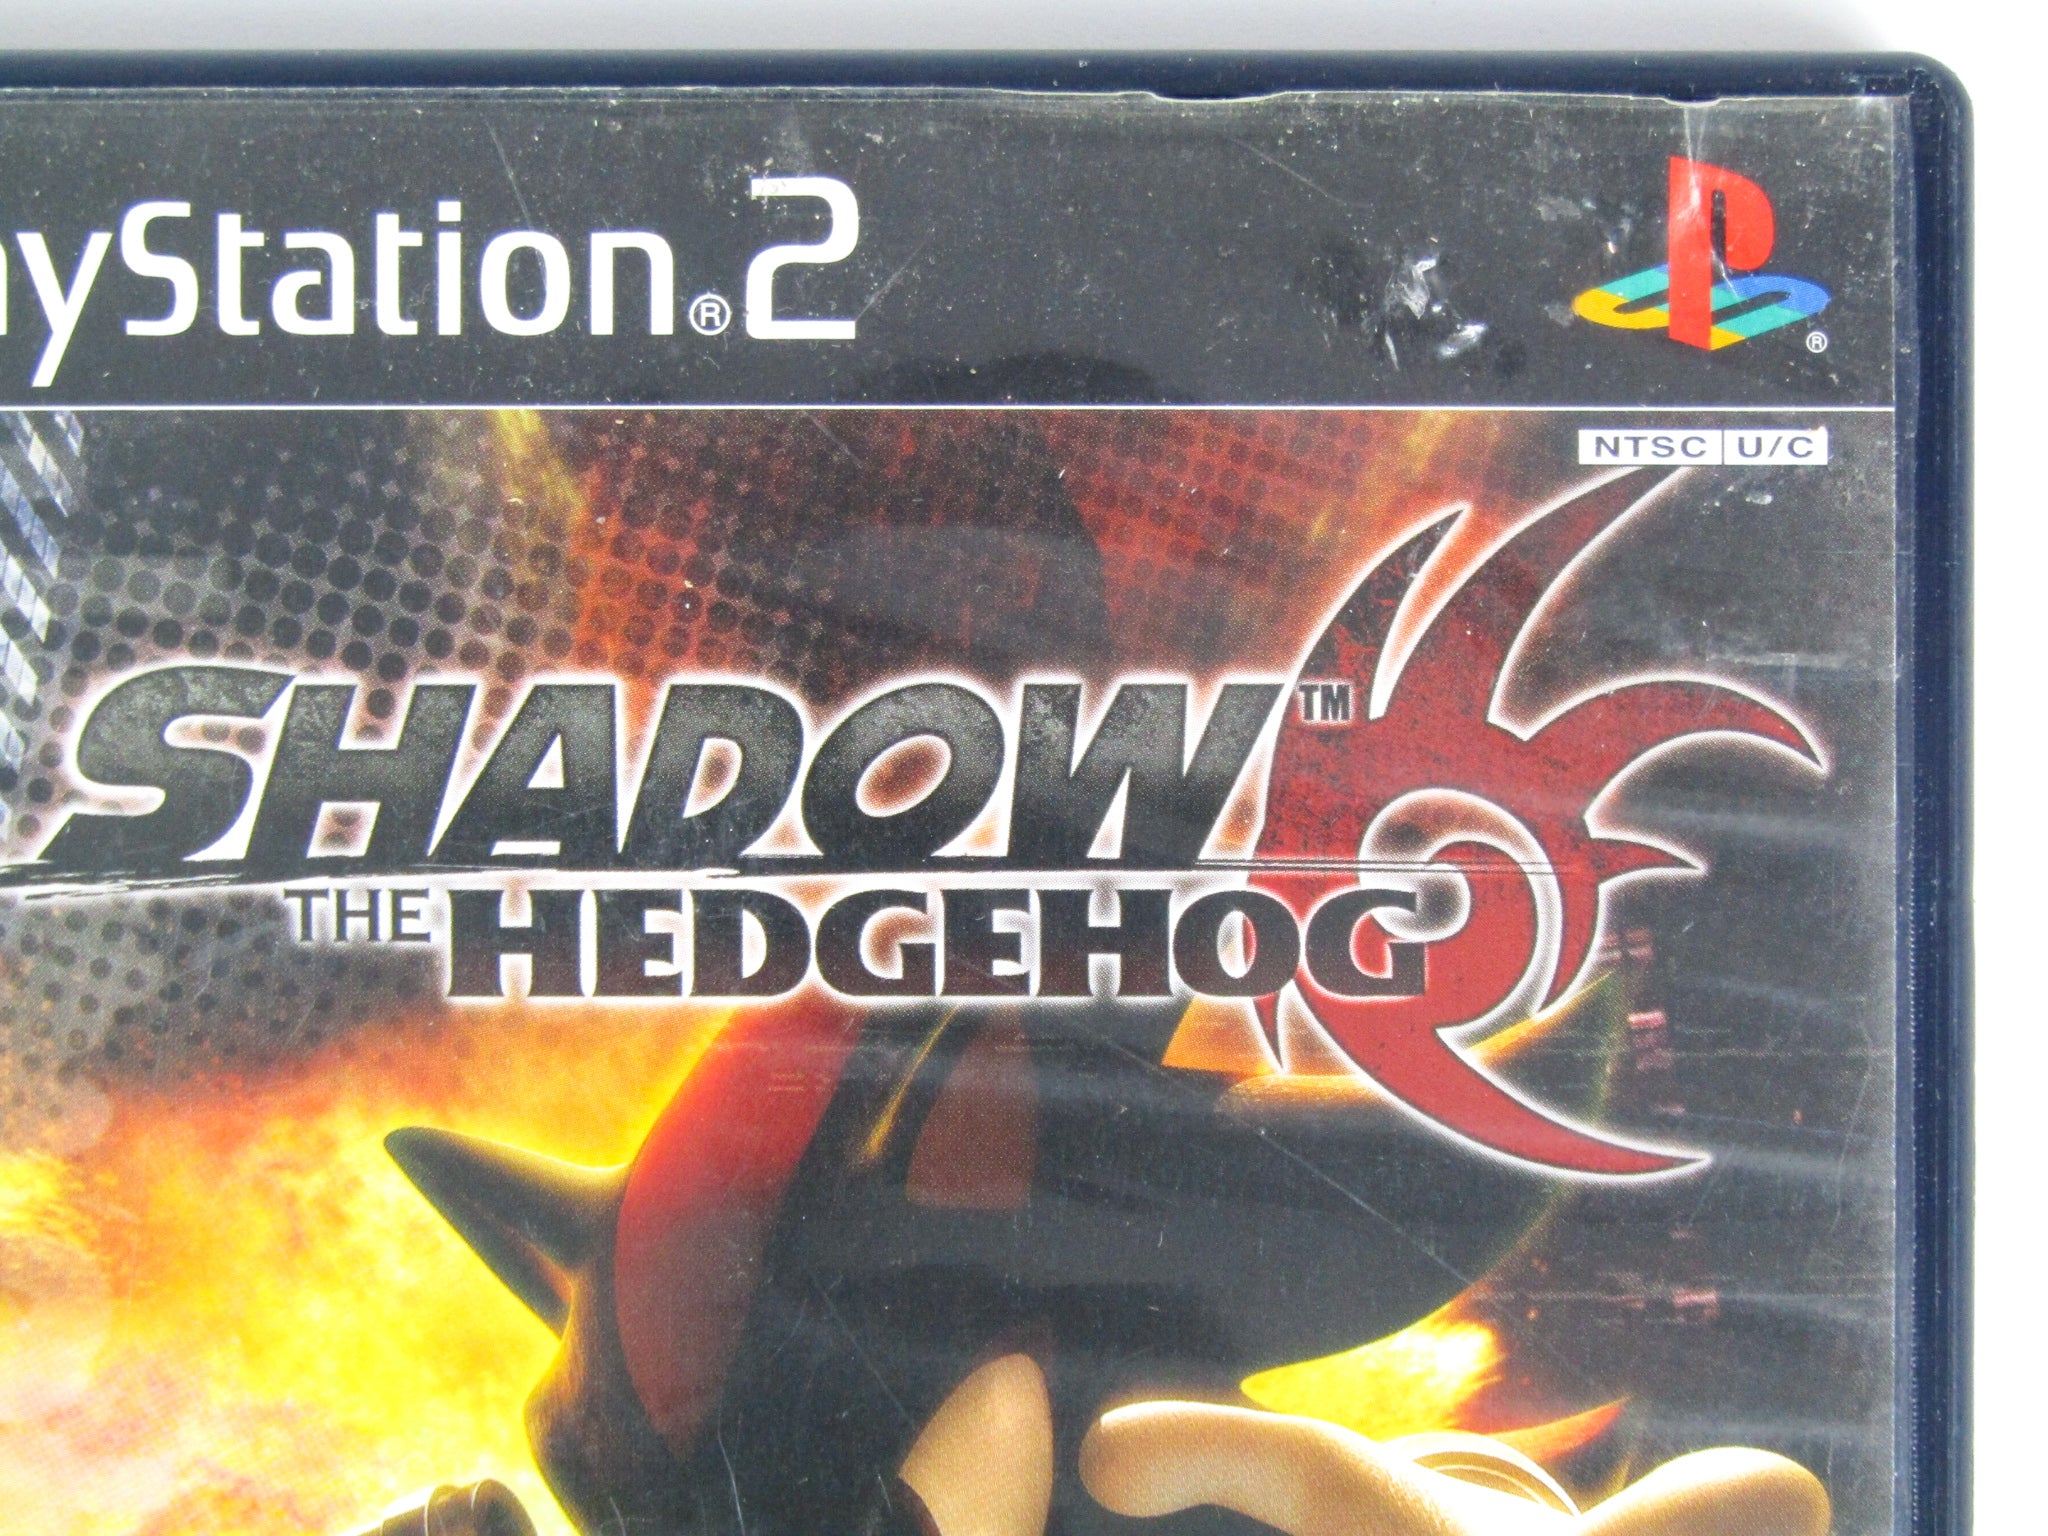 Shadow the Hedgehog - Playstation 2 – Retro Raven Games